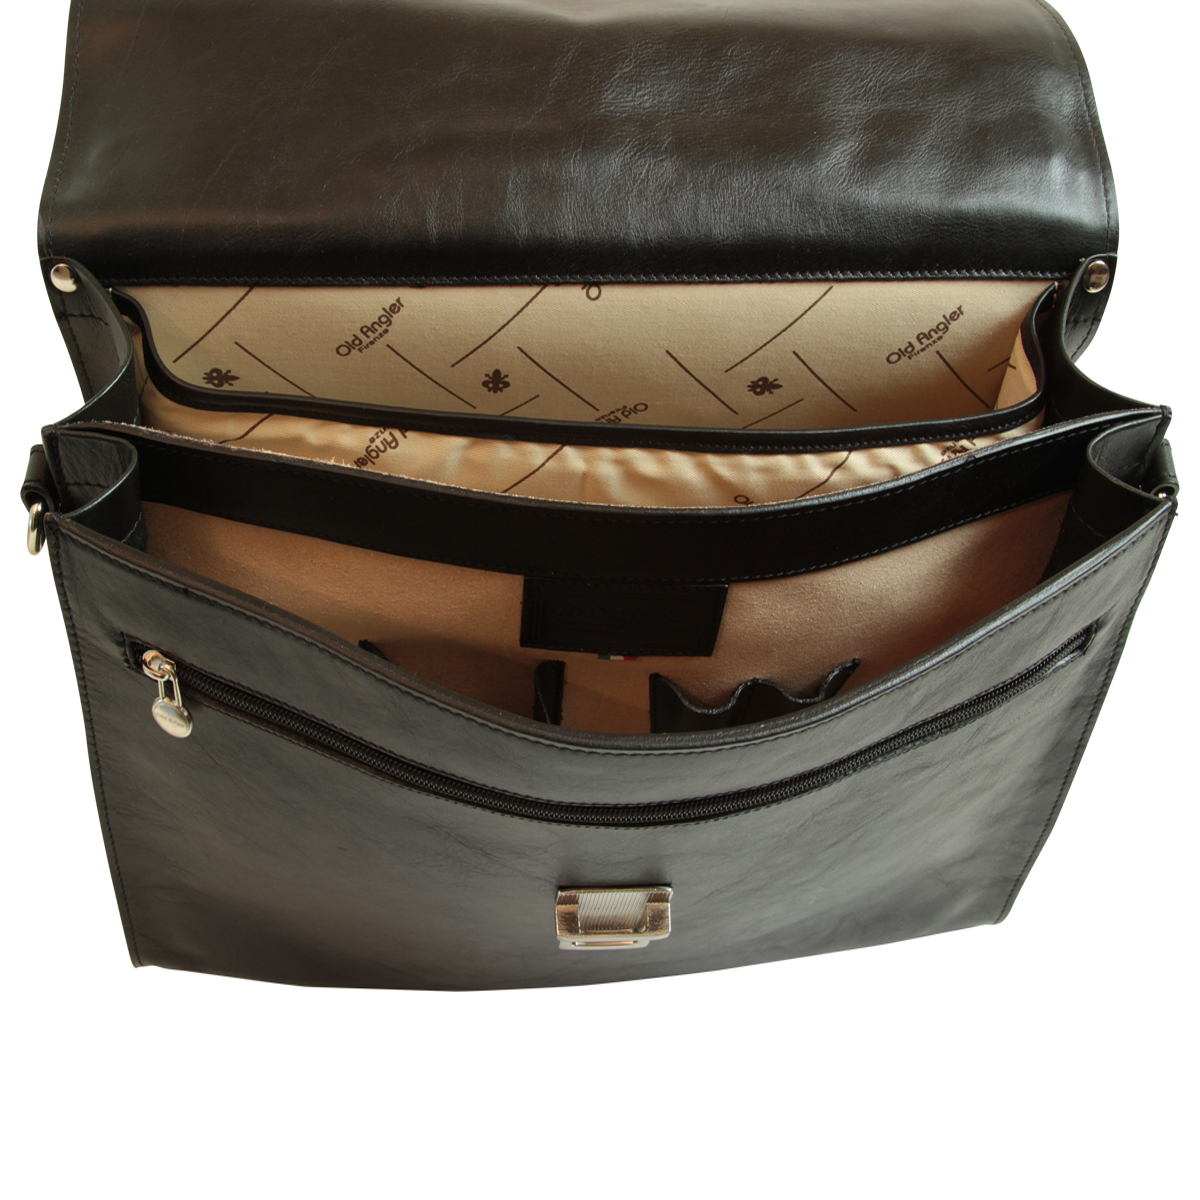 Leather Laptop Briefcase - Black | 052889NE UK | Old Angler Firenze